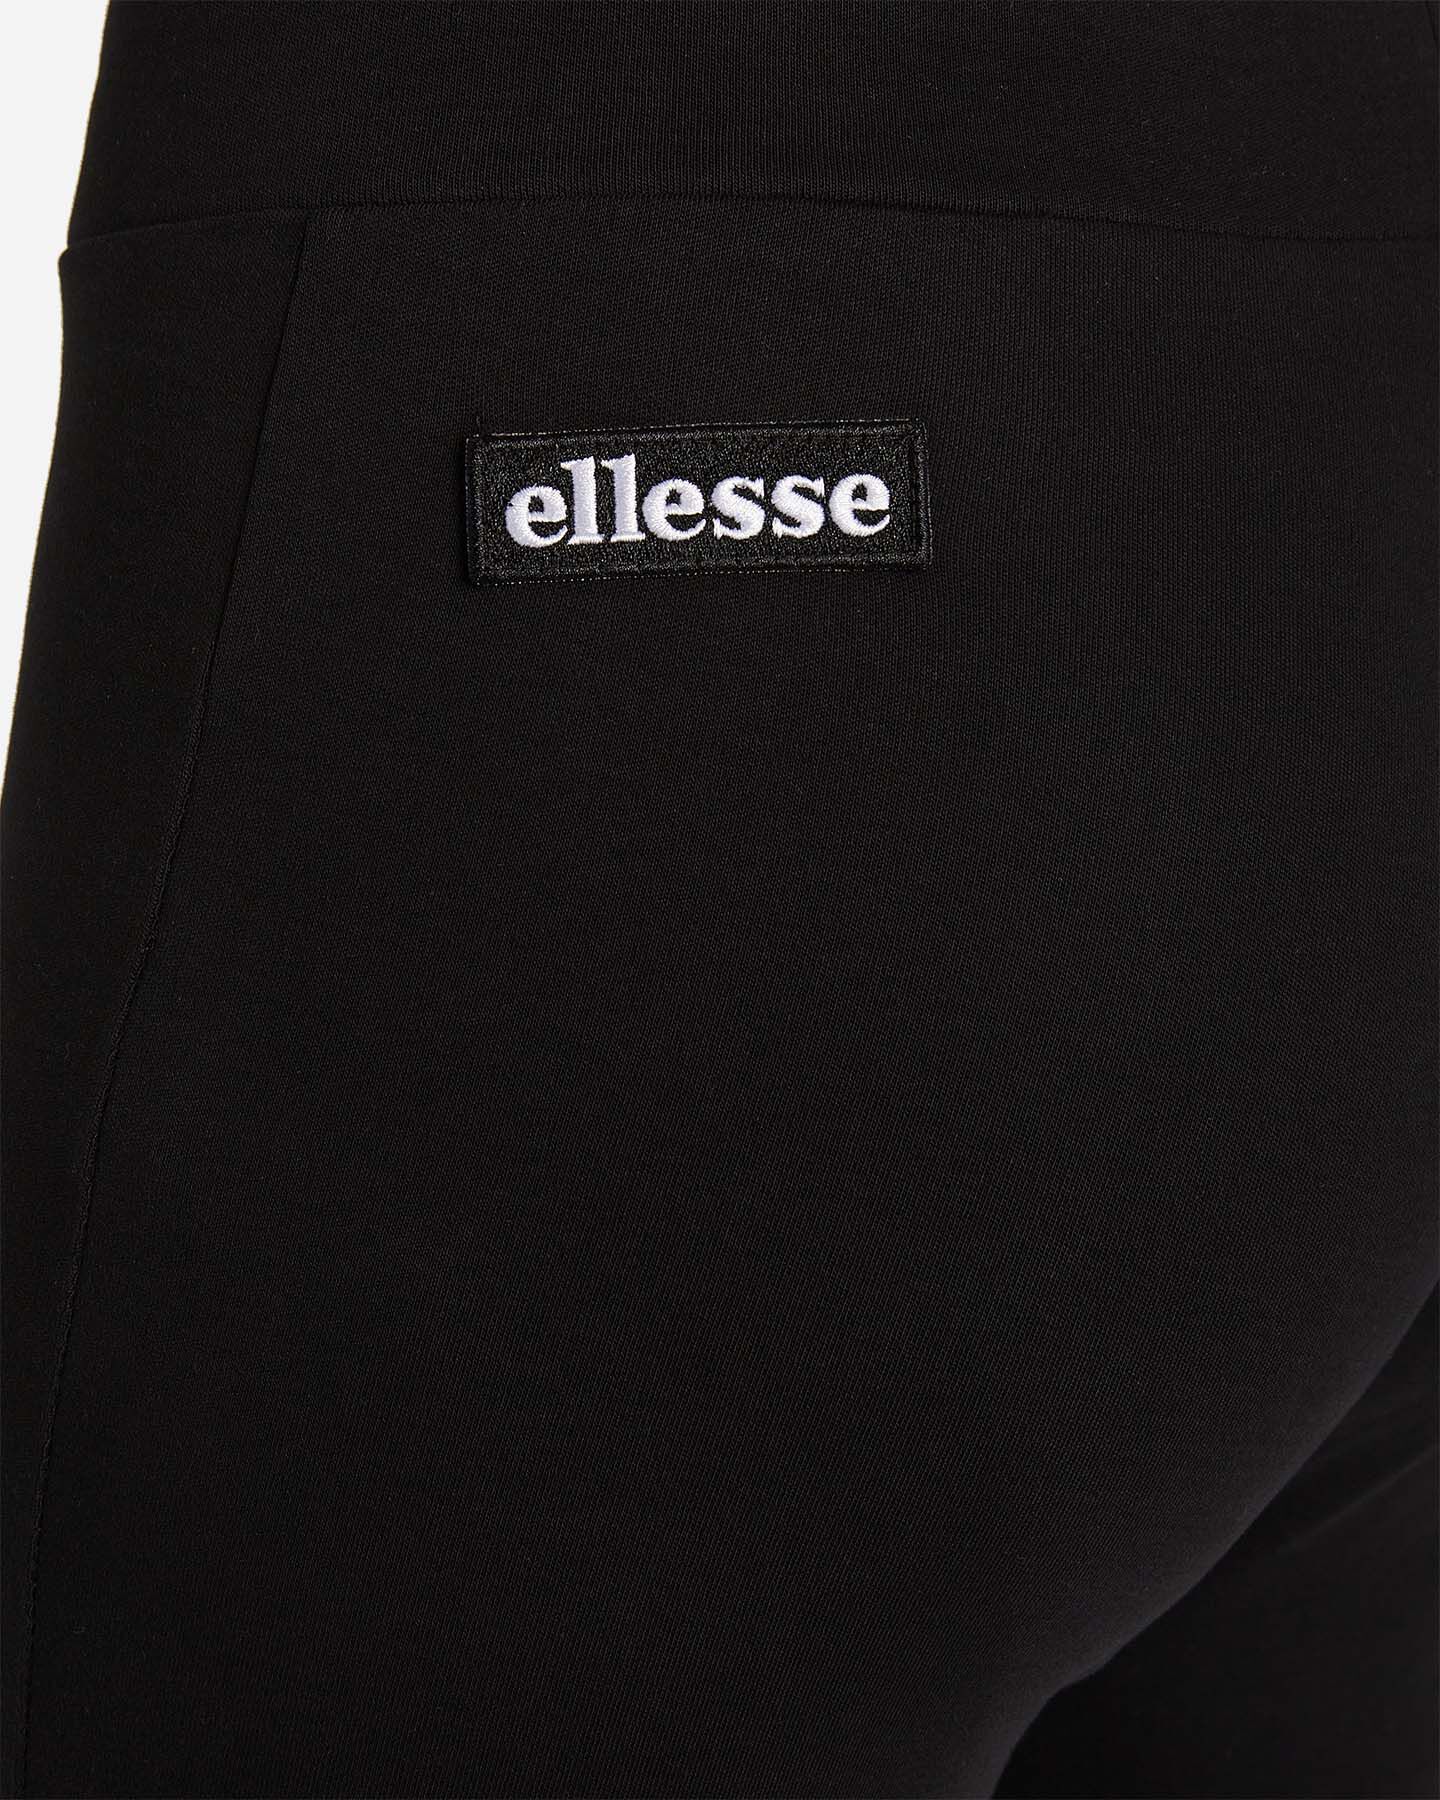  Pantalone ELLESSE AEROBIC W S4074591|050|XS scatto 3